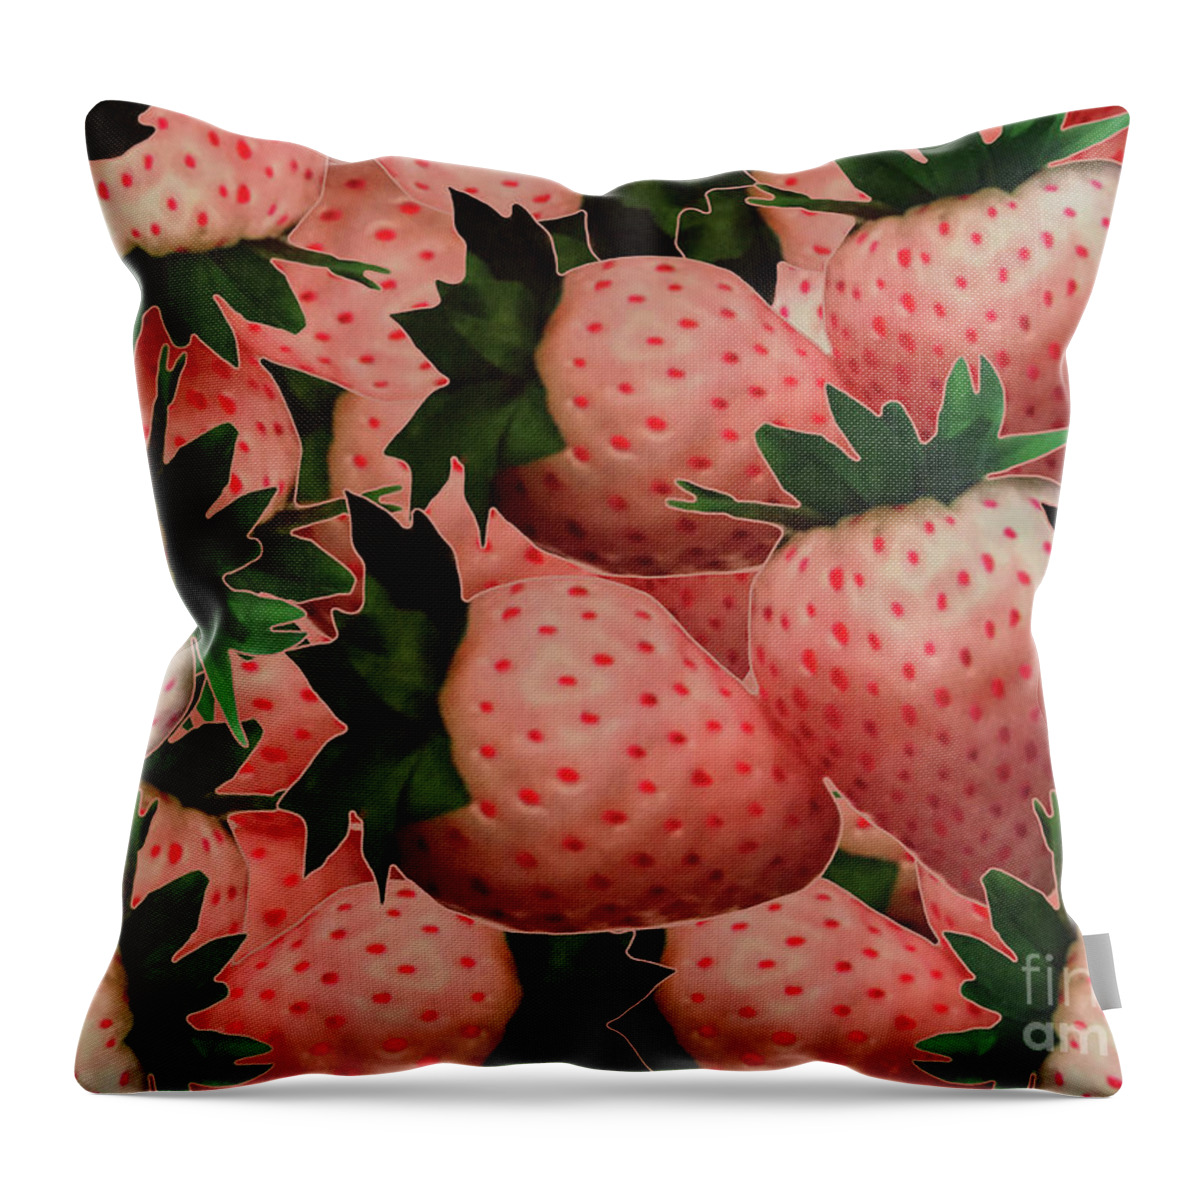 Terra Throw Pillow featuring the photograph Terra Cotta Strawberries by Rockin Docks